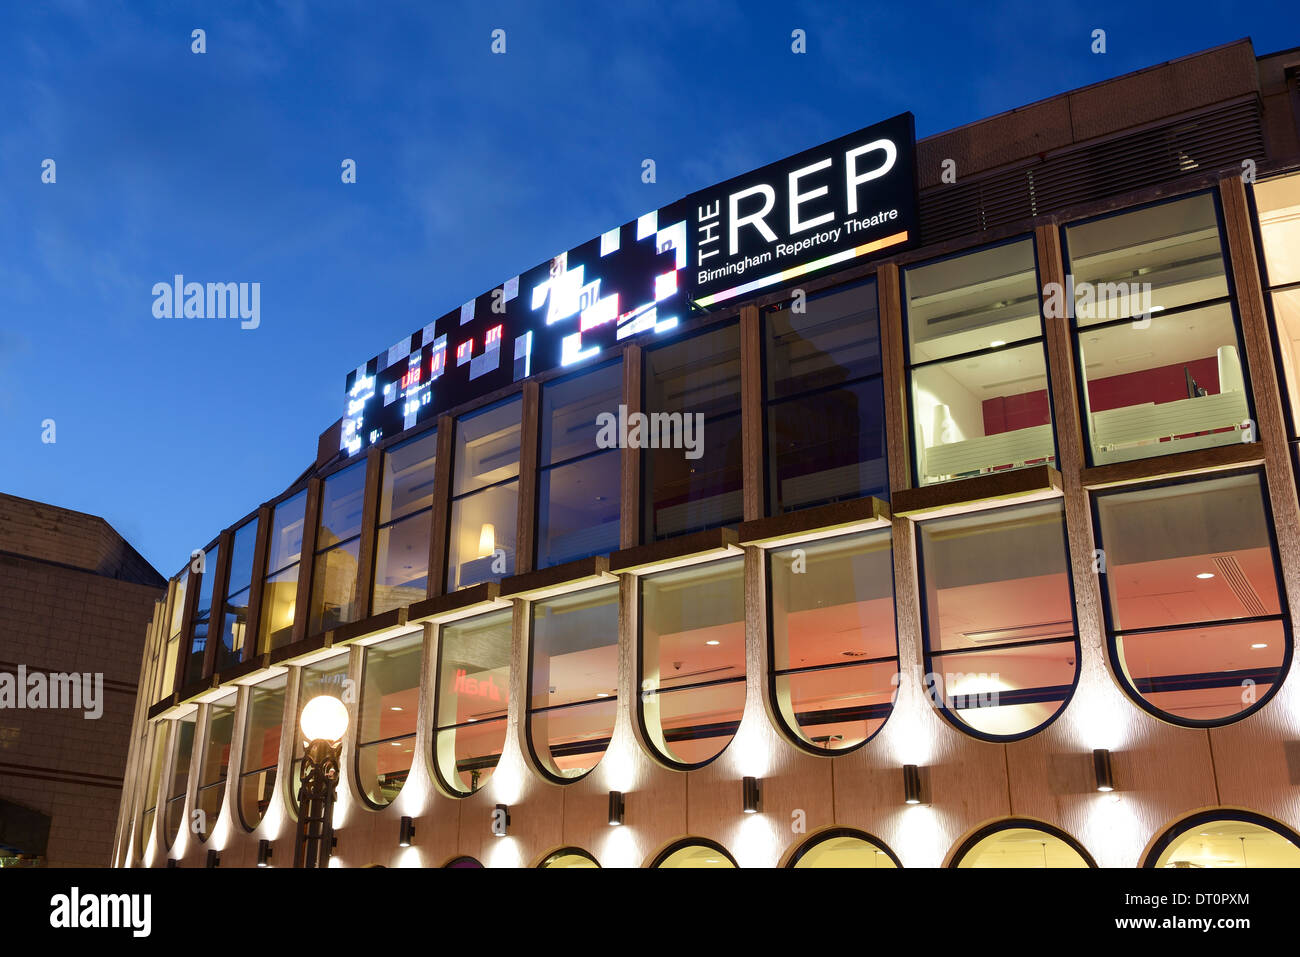 The Rep theatre in Centenary Square Birmingham UK Stock Photo